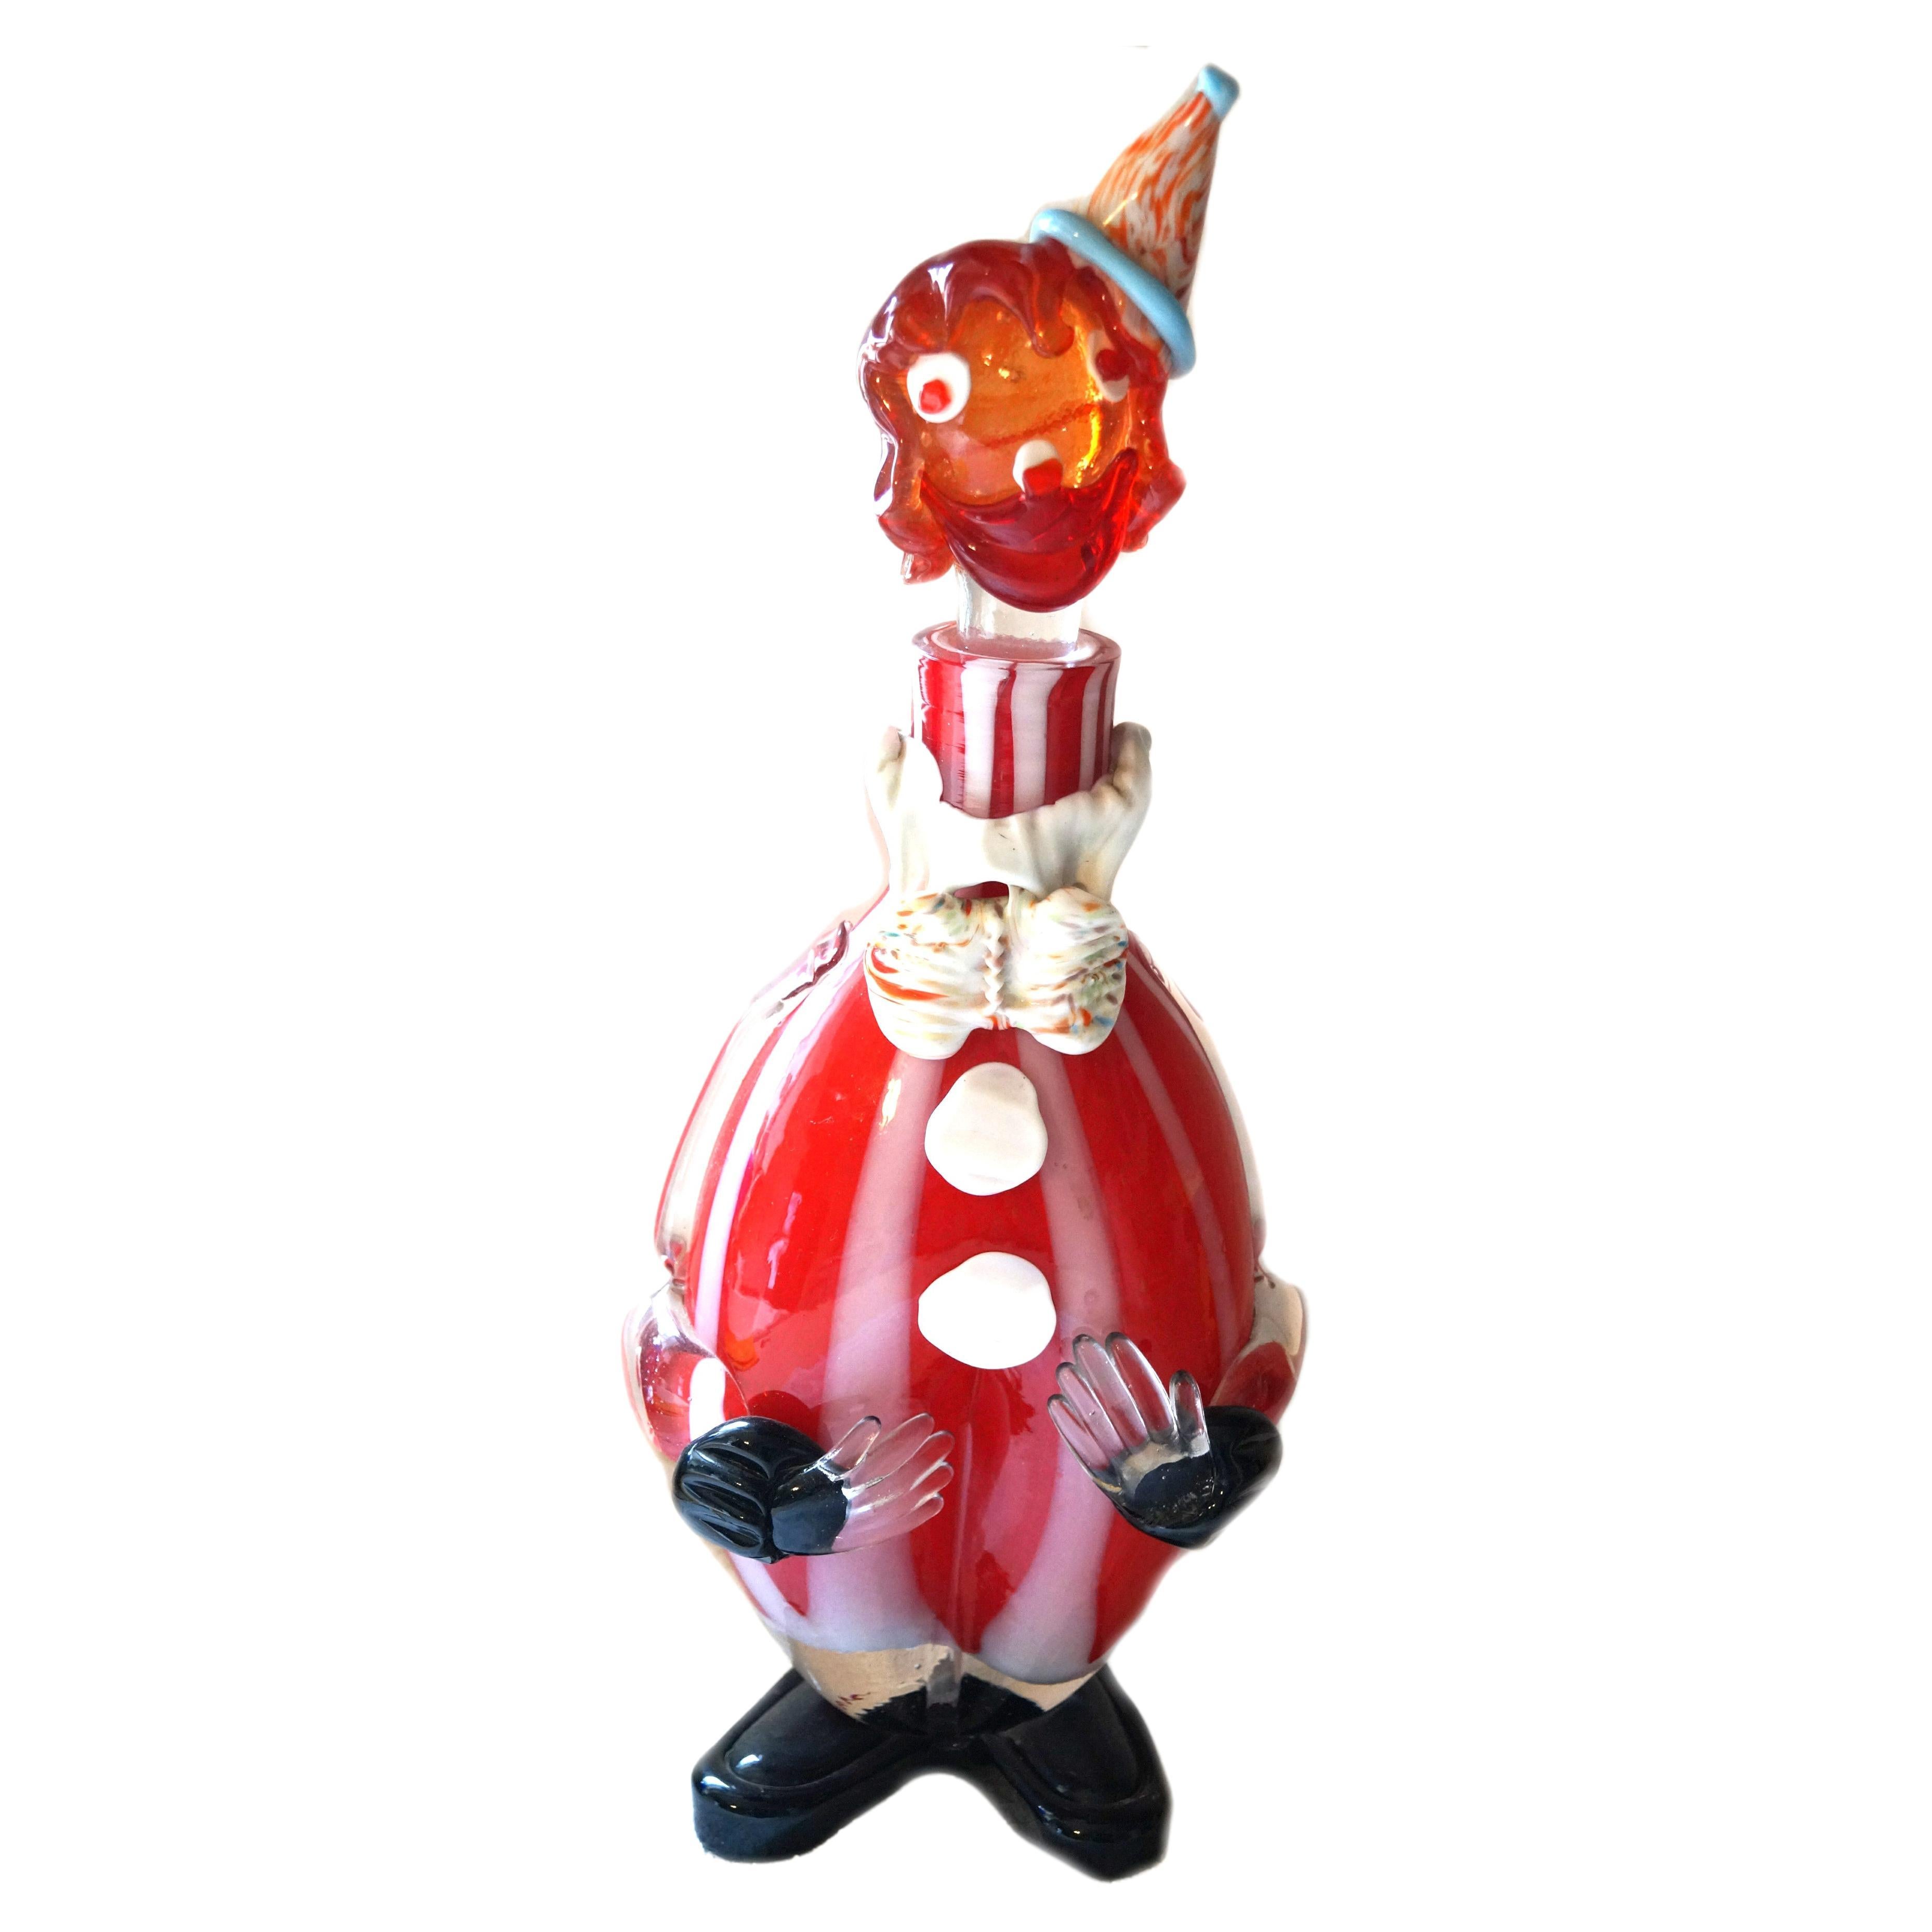 Italian Hand Blown Murano Glass Clown Decanter with Stopper Red Orange Black 